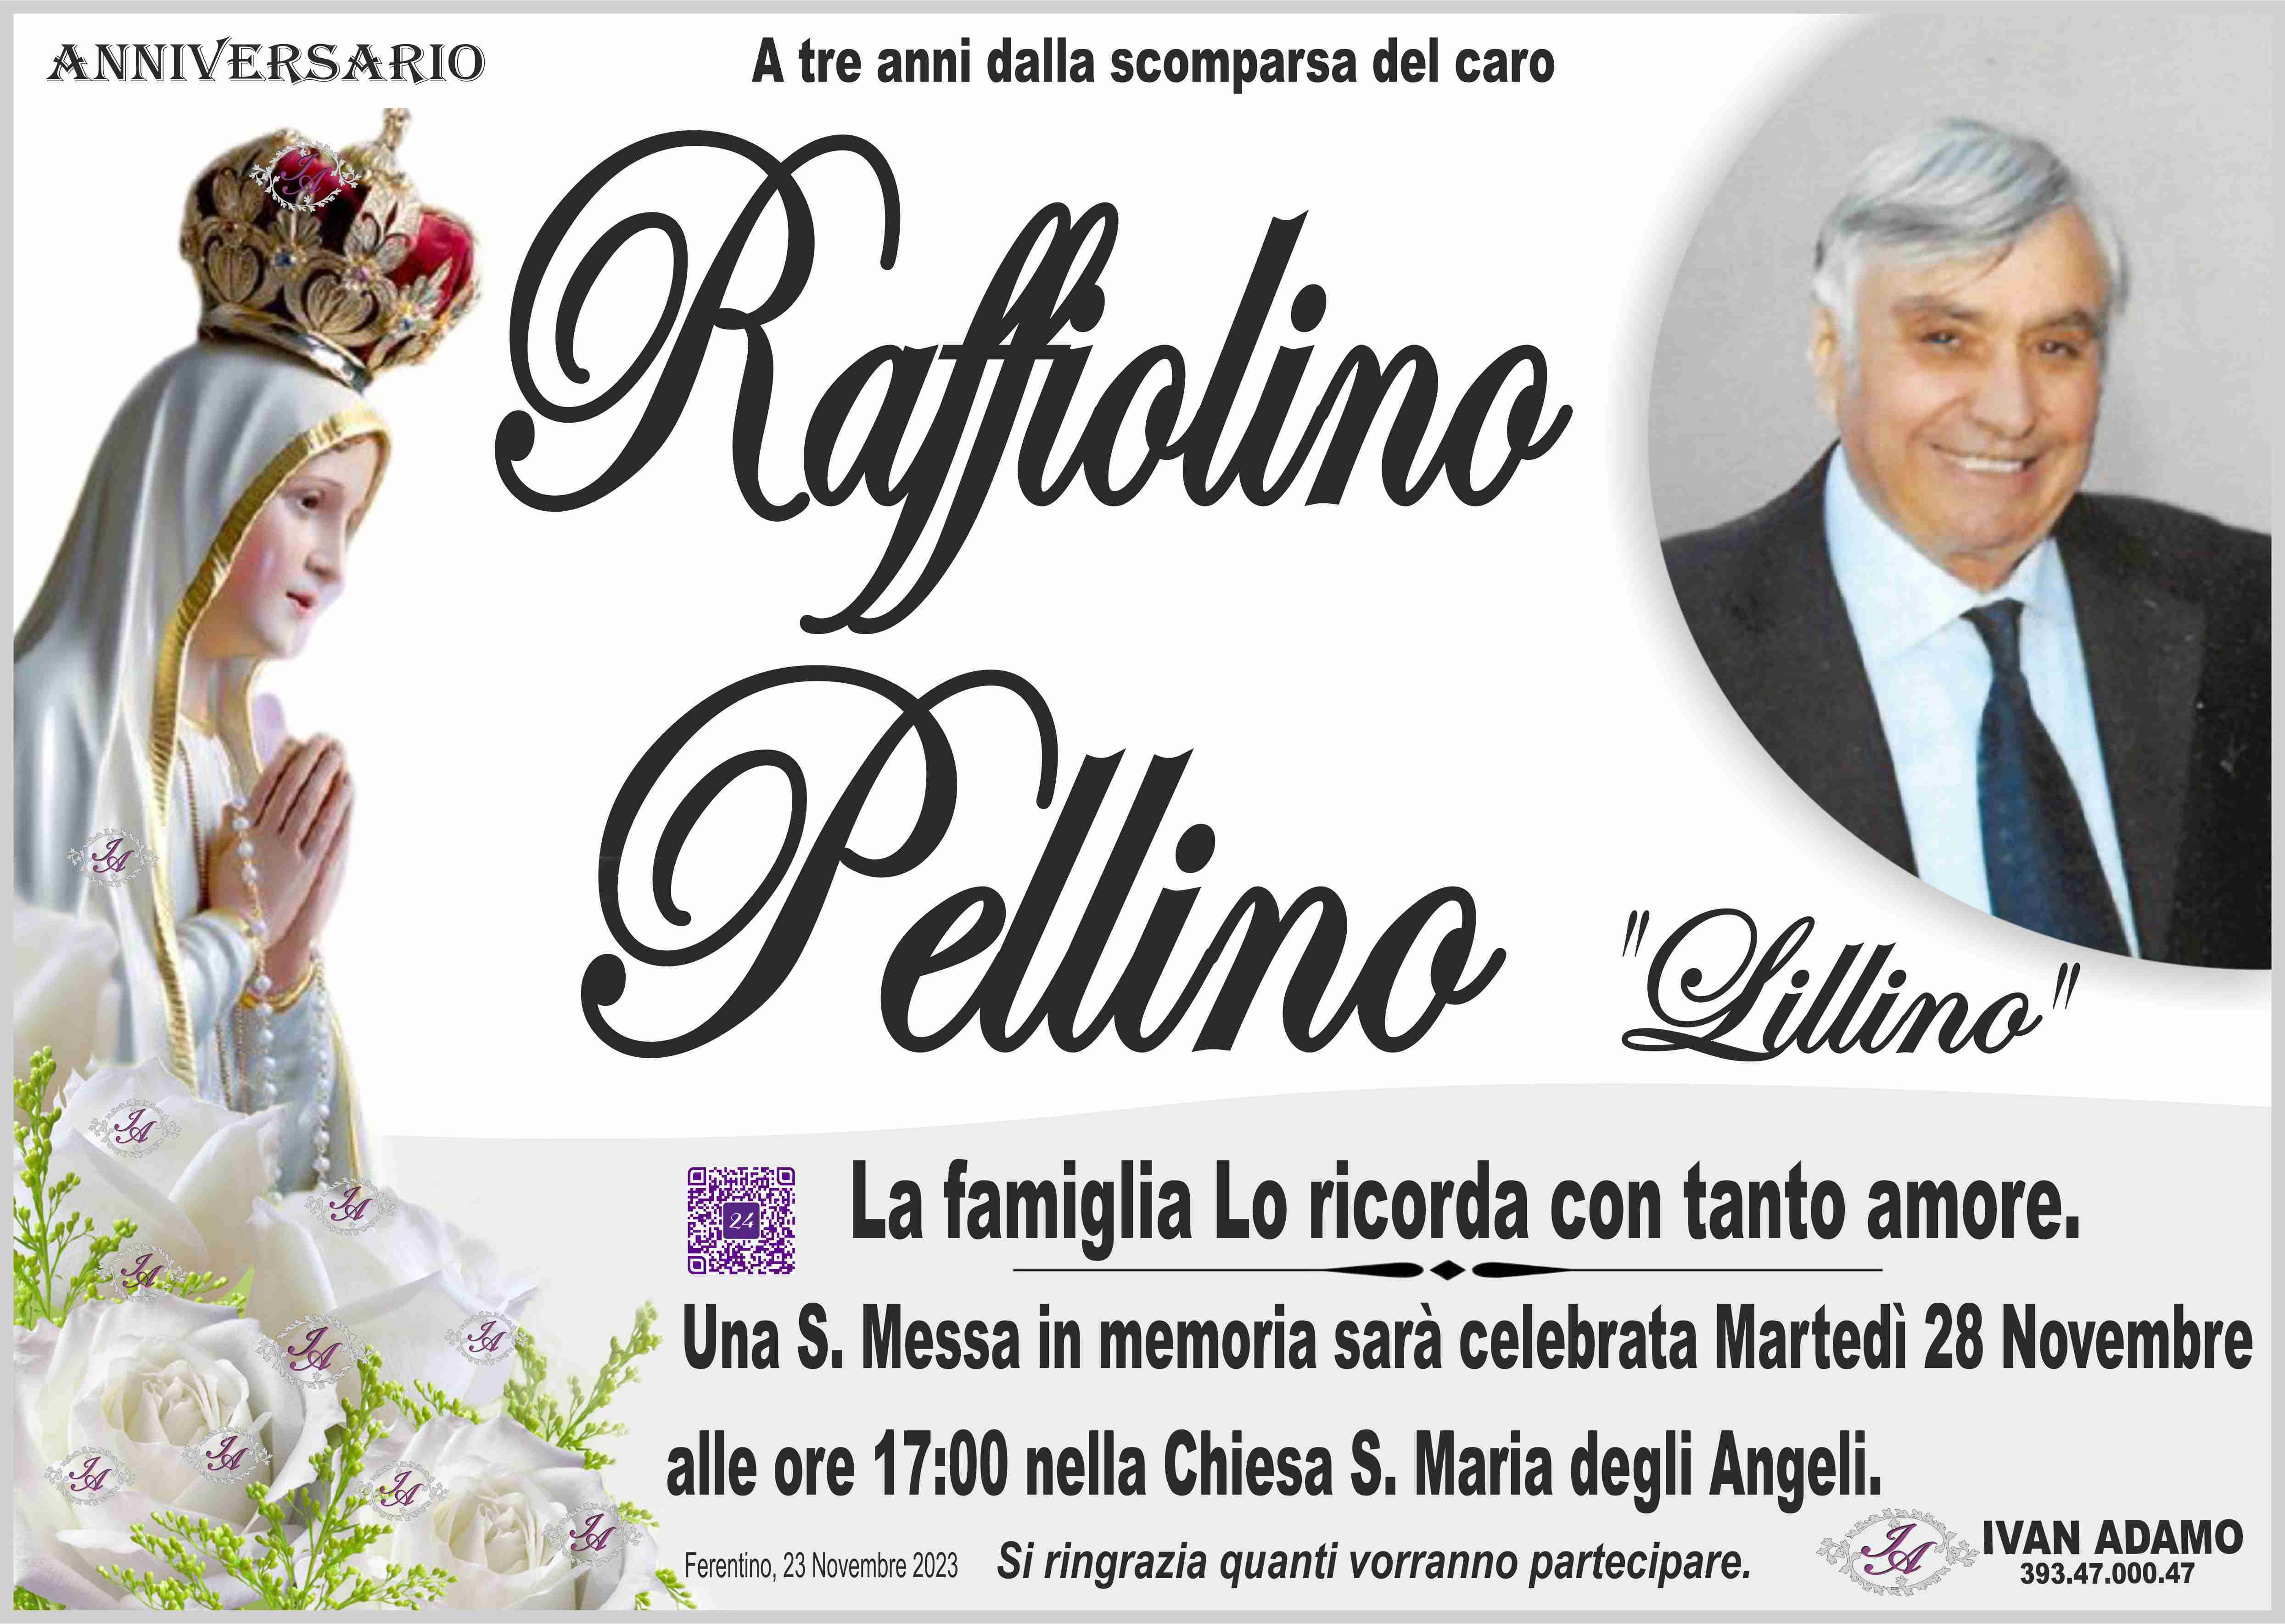 Raffiolino Pellino